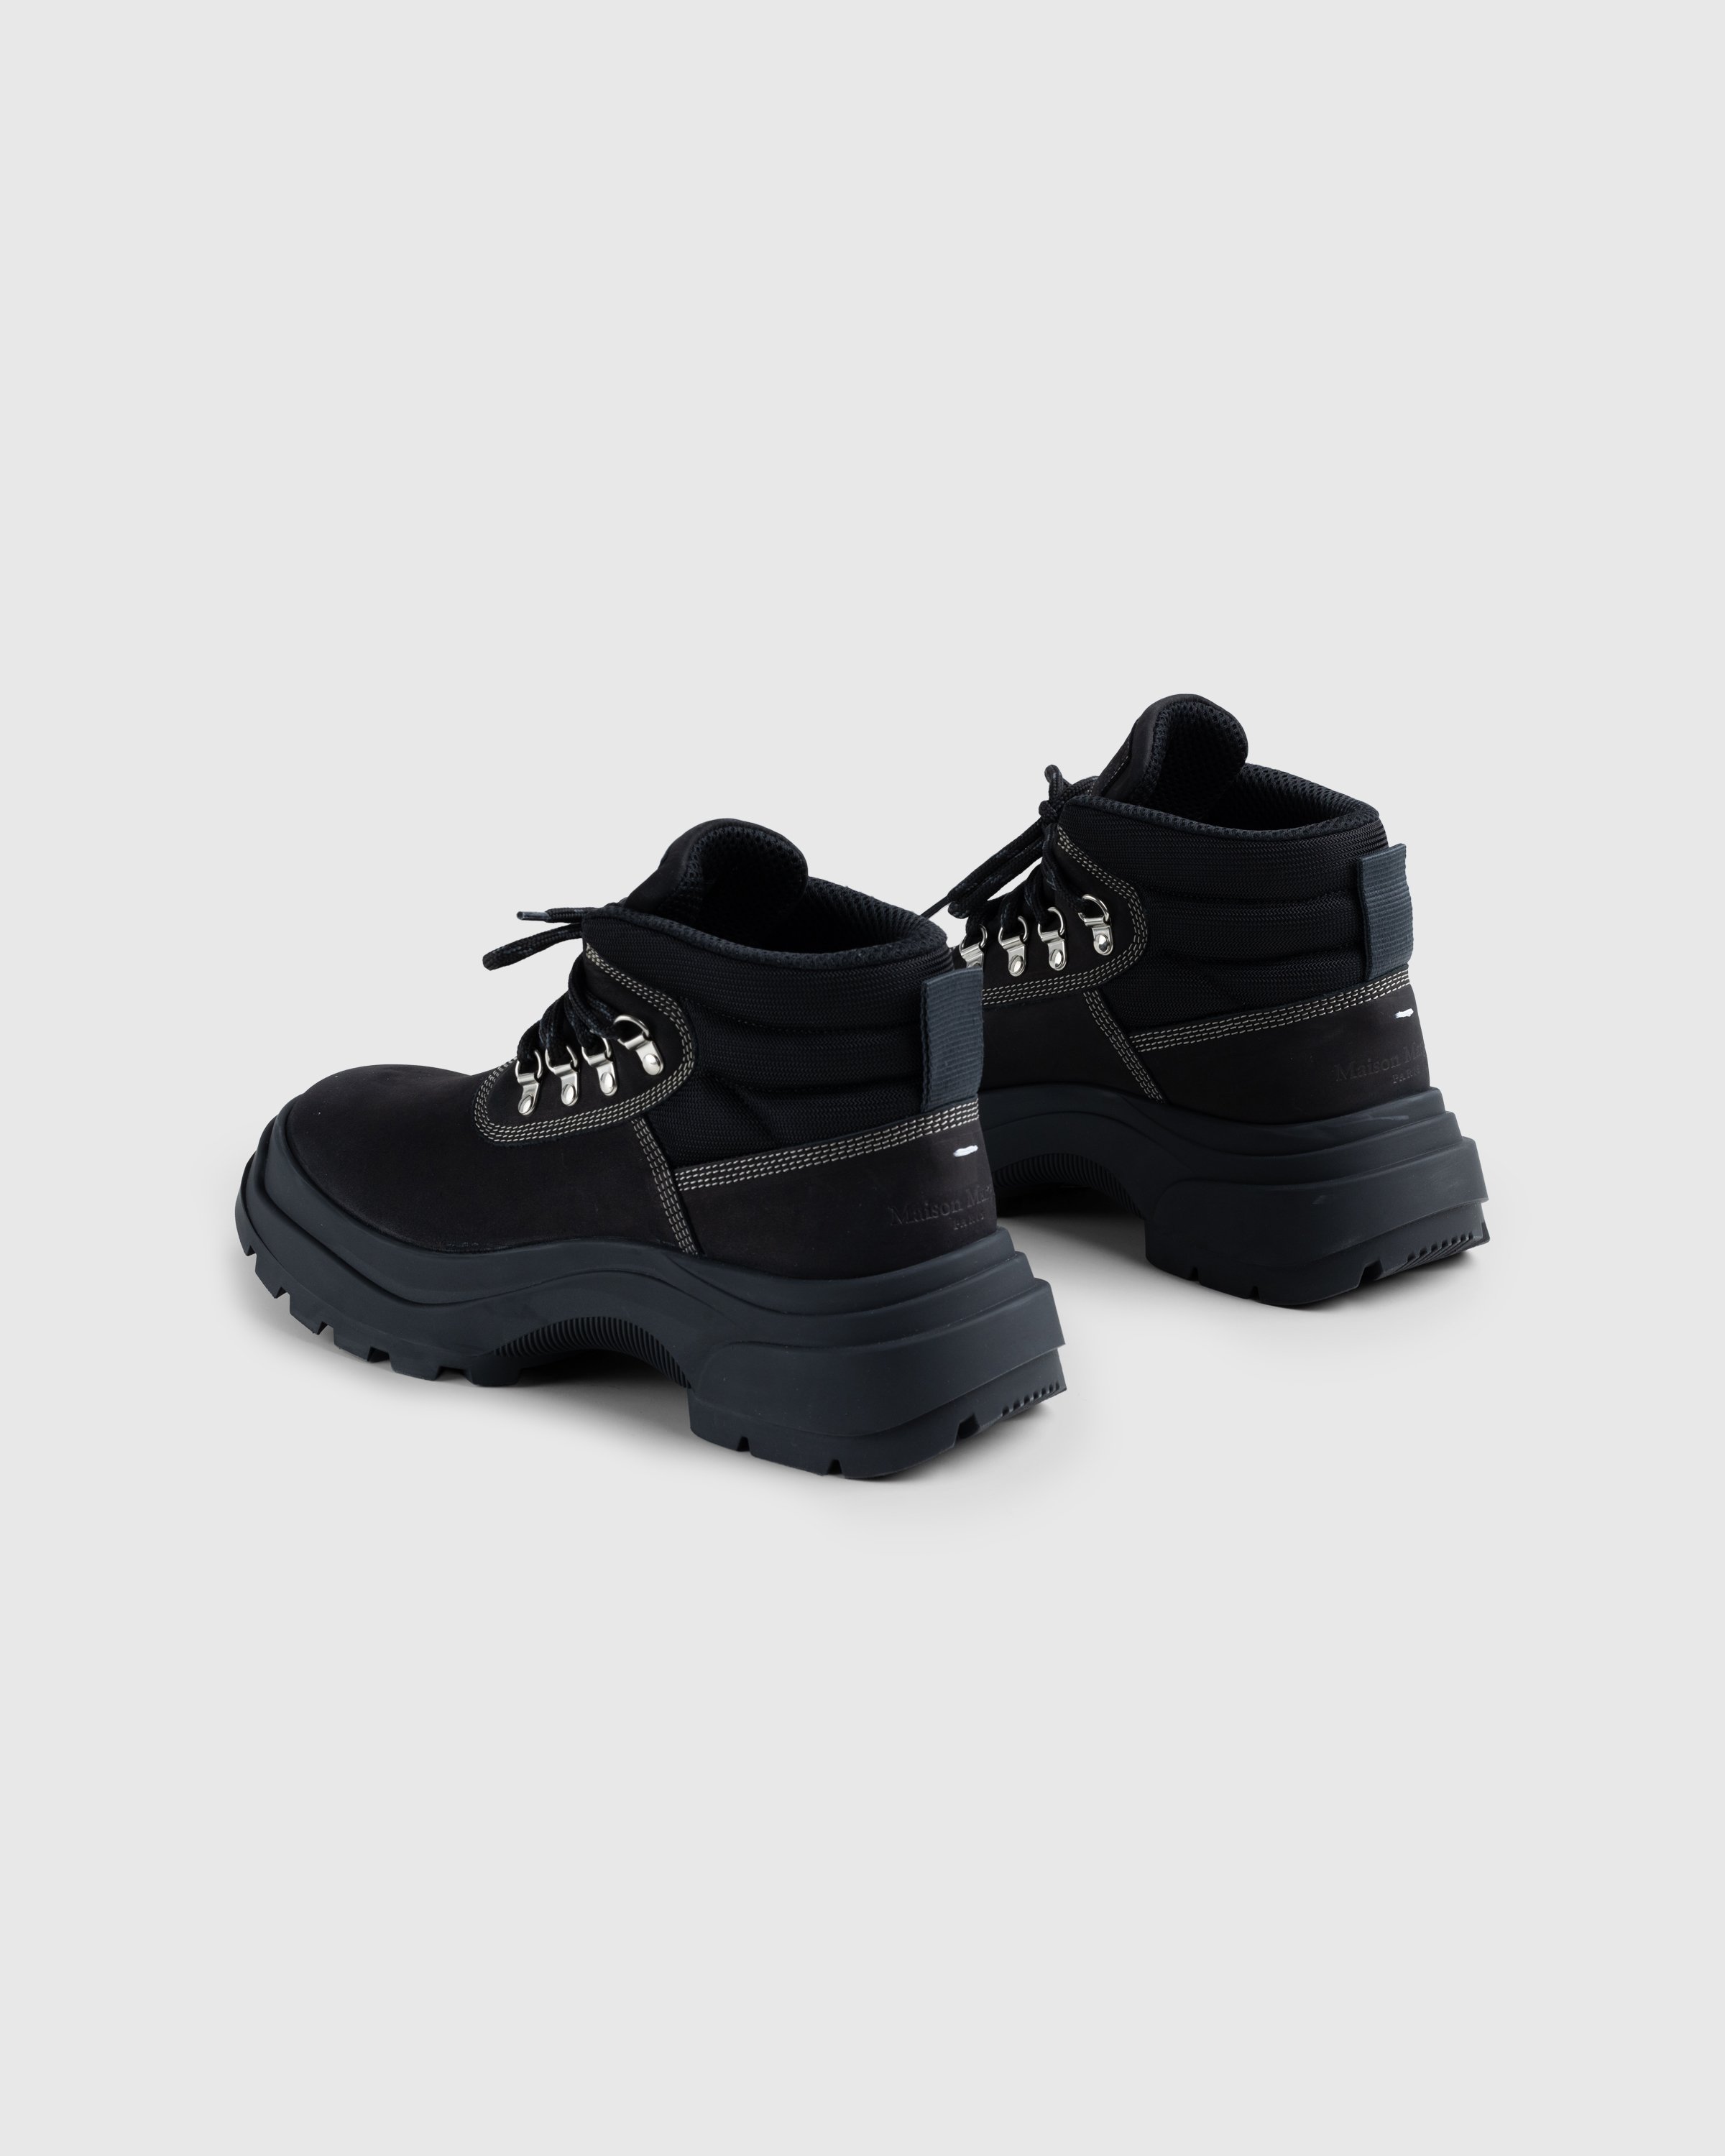 Maison Margiela - Alex Hiking Boot Black/Black - Footwear - Black - Image 4